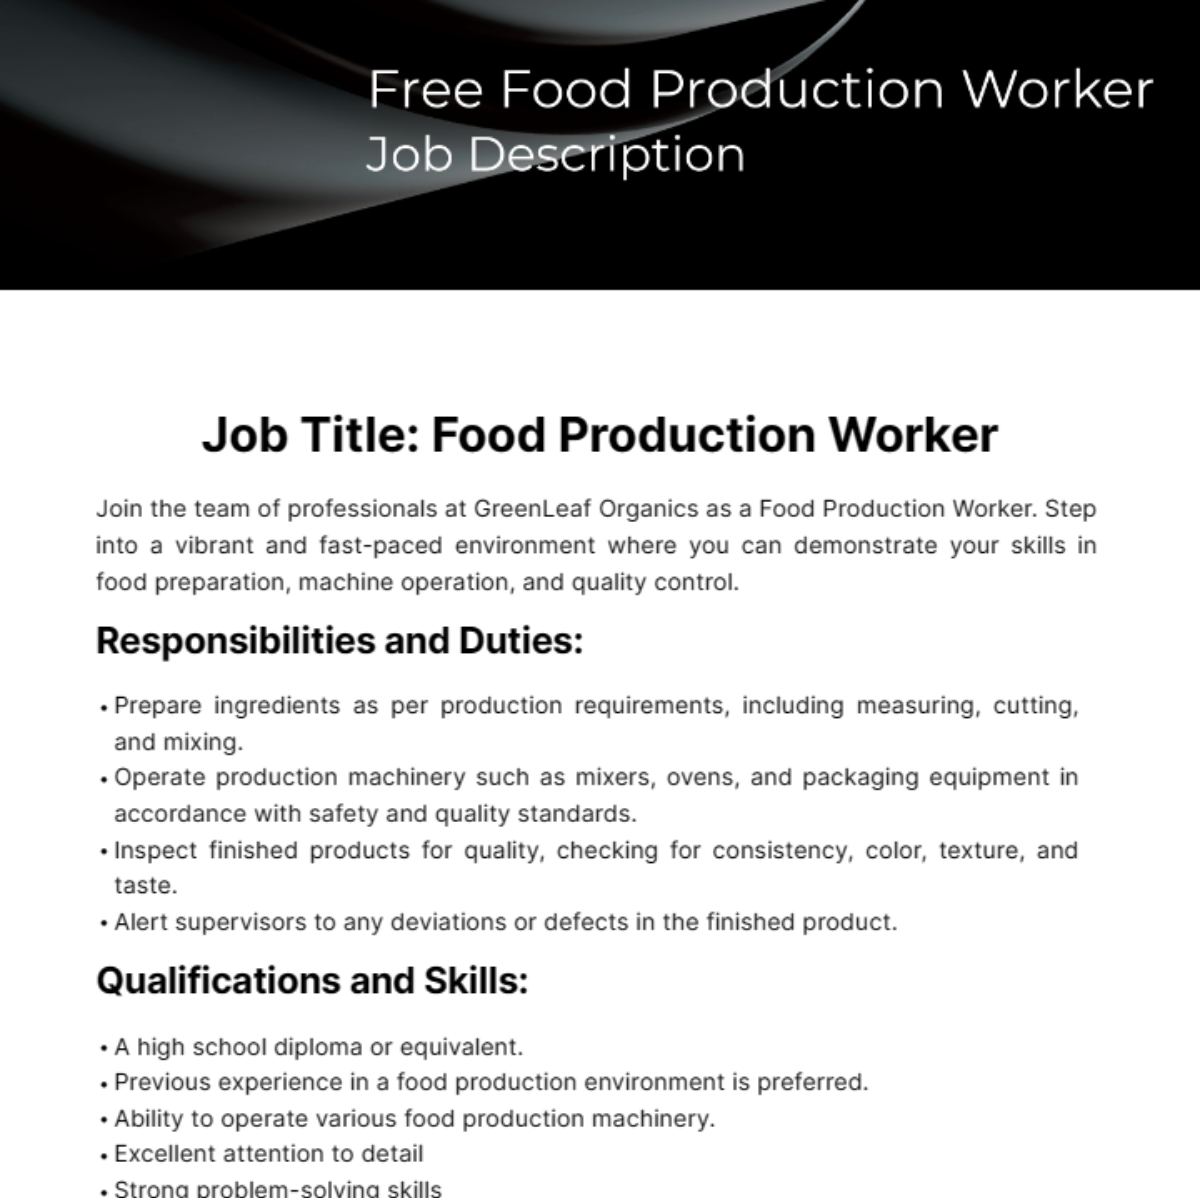 Free Food Production Worker Job Description Template